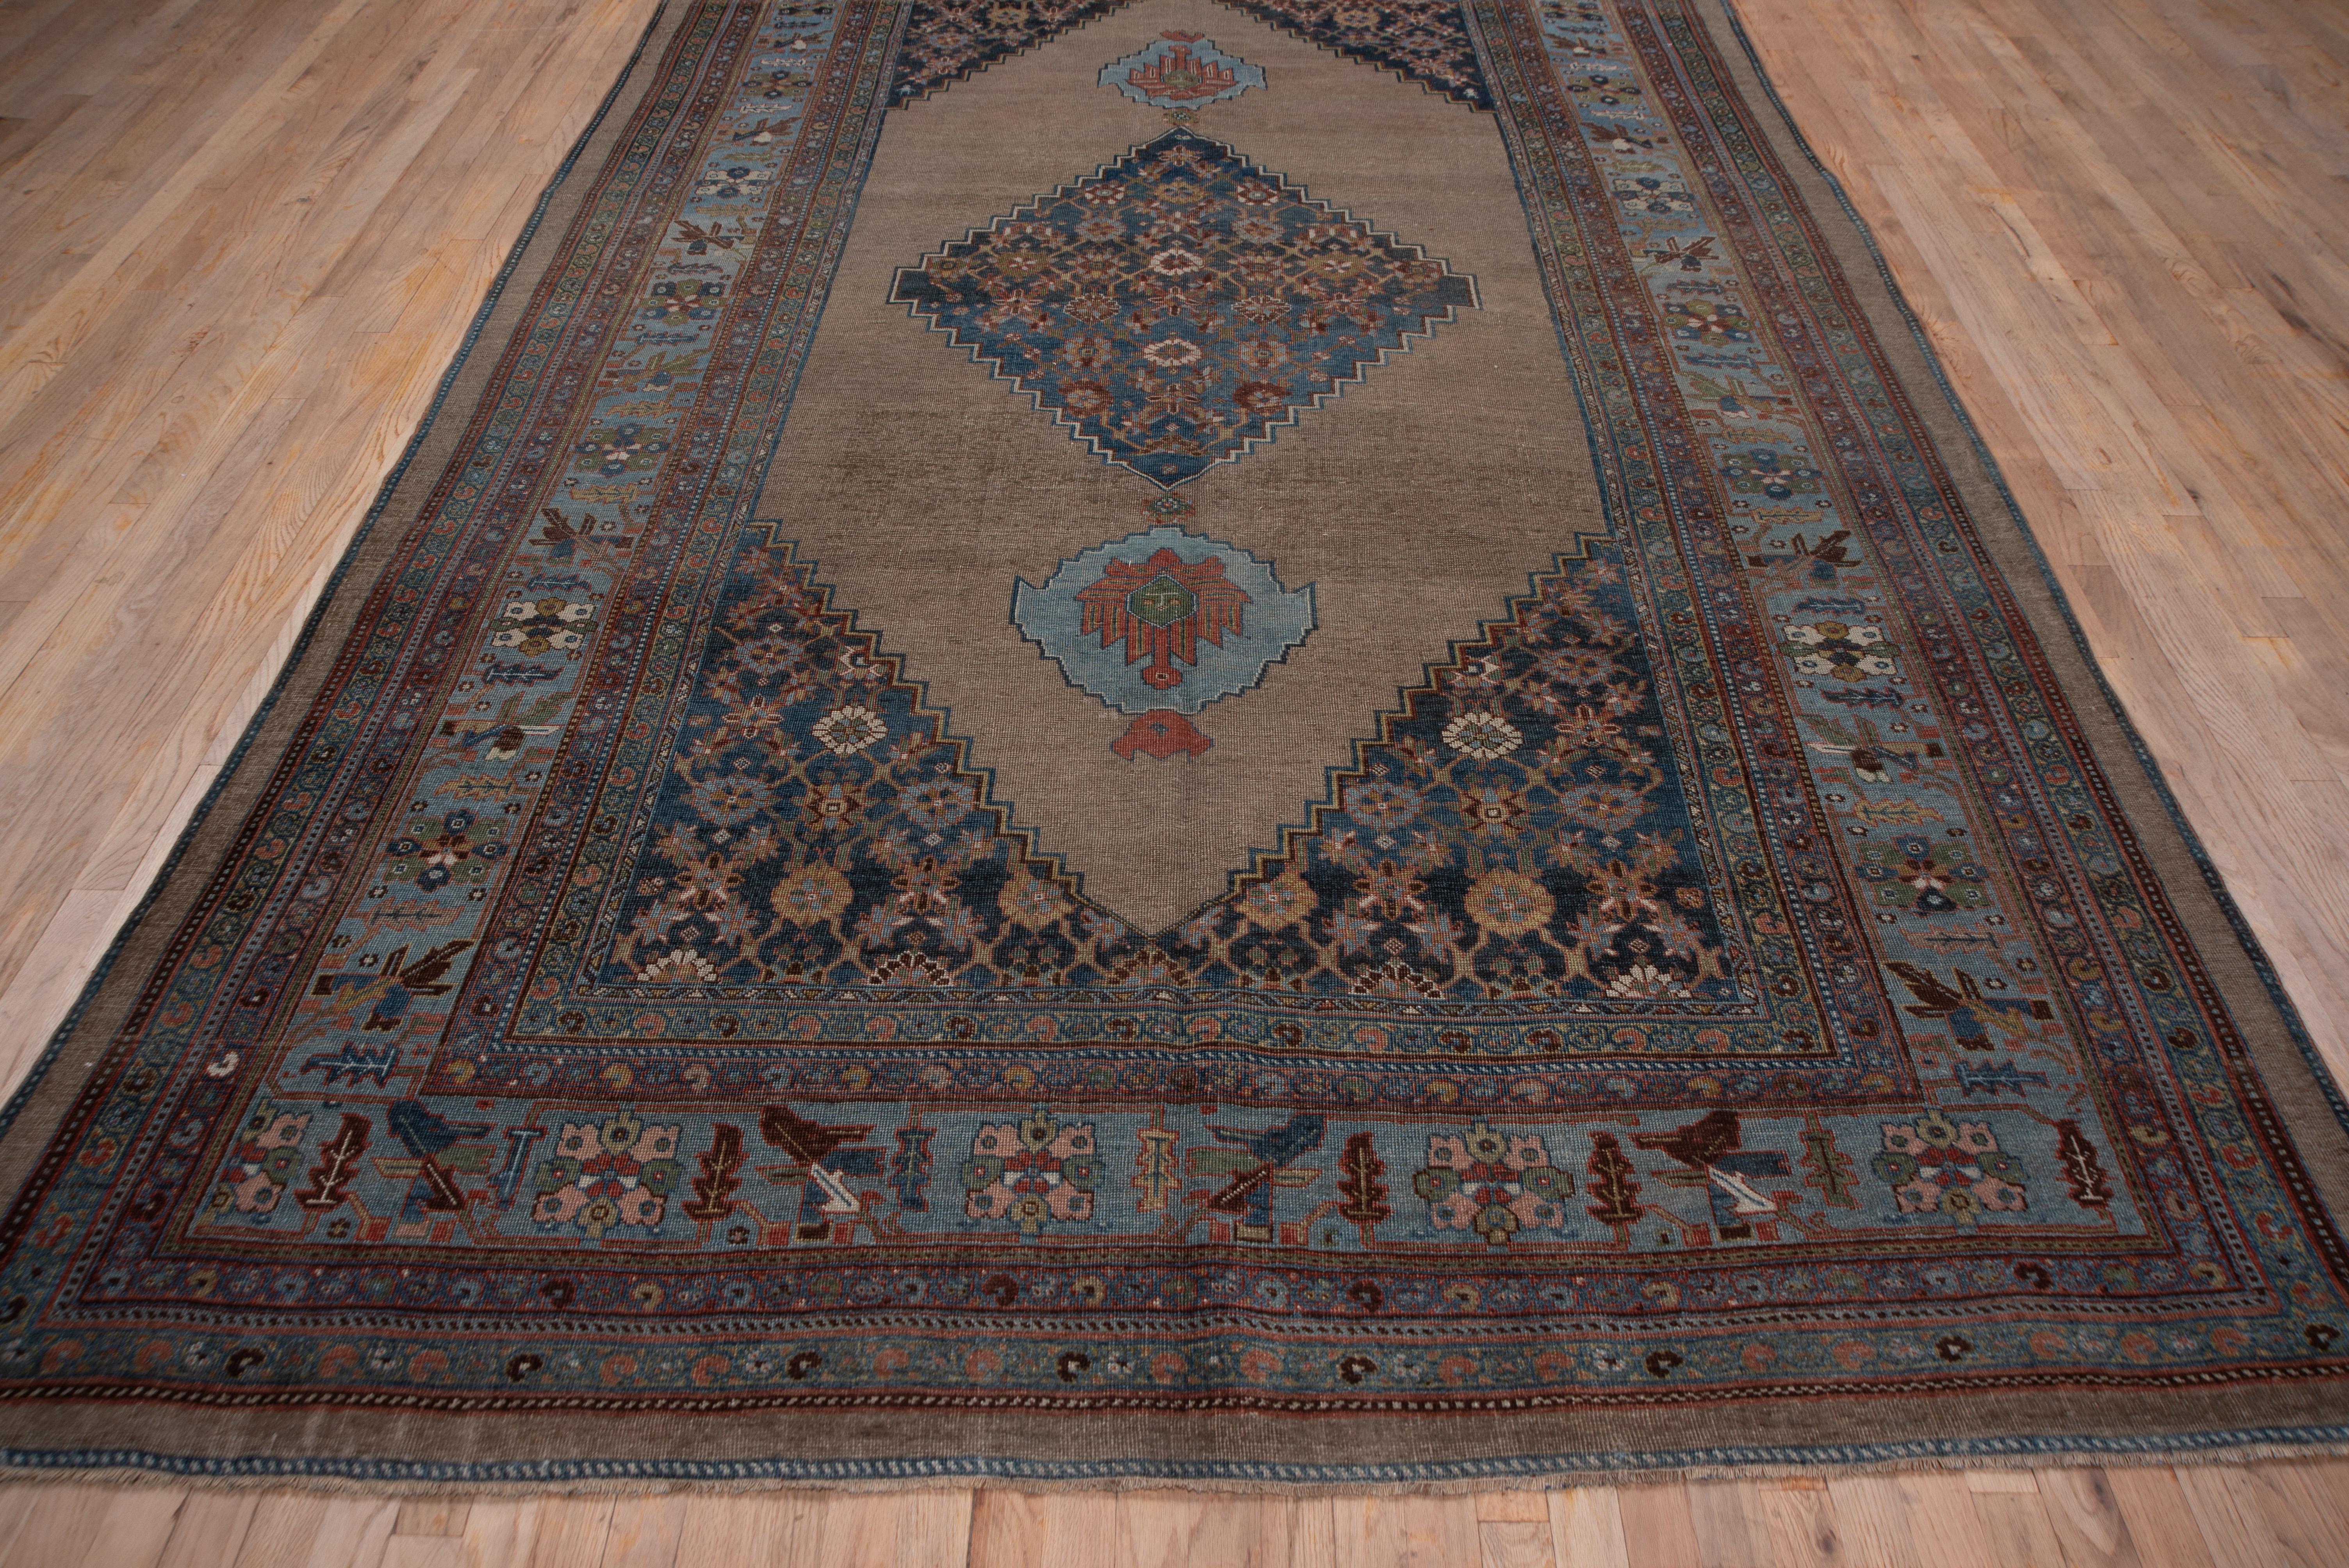 Hand-Knotted Antique Tribal Persian Bidjar Carpet, Light Blue Detailed Border, Brown Field For Sale